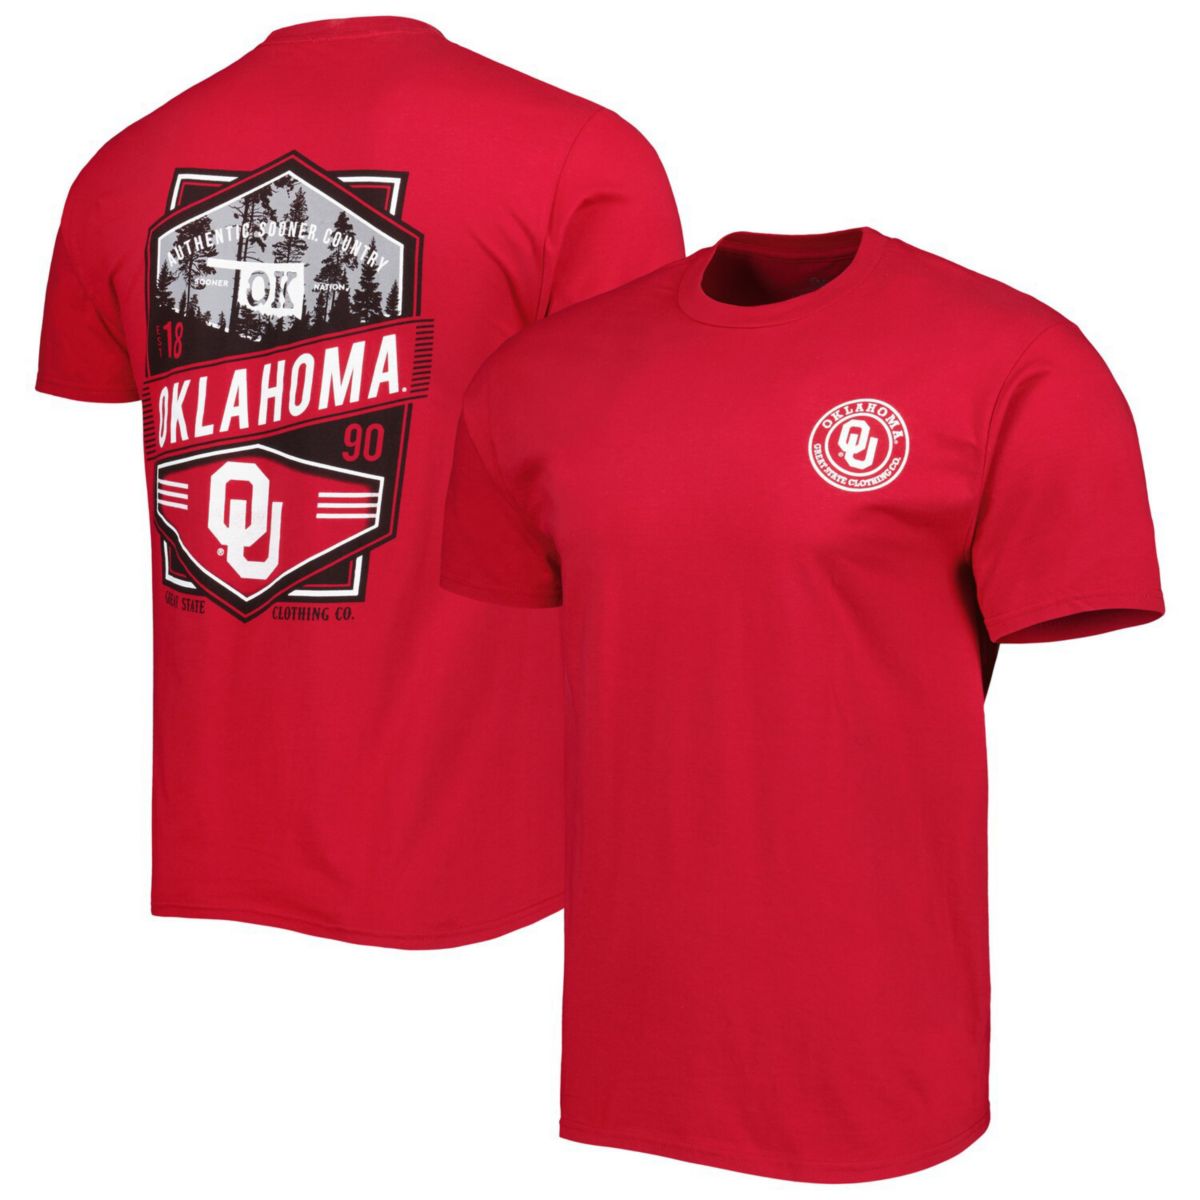 Мужская темно-красная футболка Oklahoma Sooners с двойным бриллиантовым гербом Great State Clothing